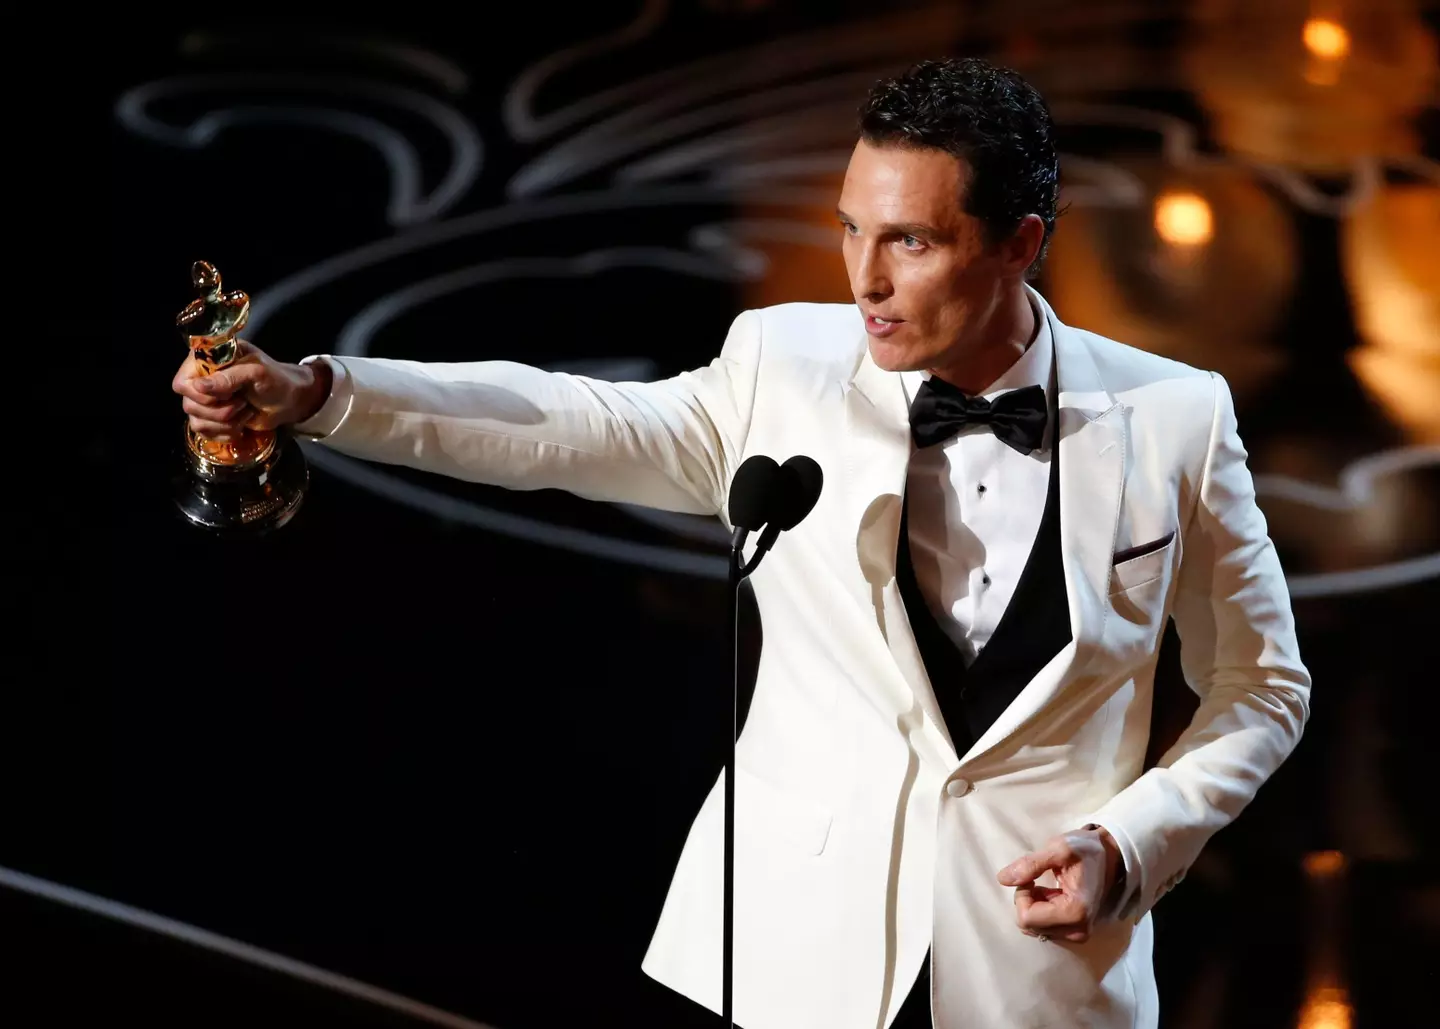 McConaughey won an Oscar for his stunning performance in Dallas Buyers Club.